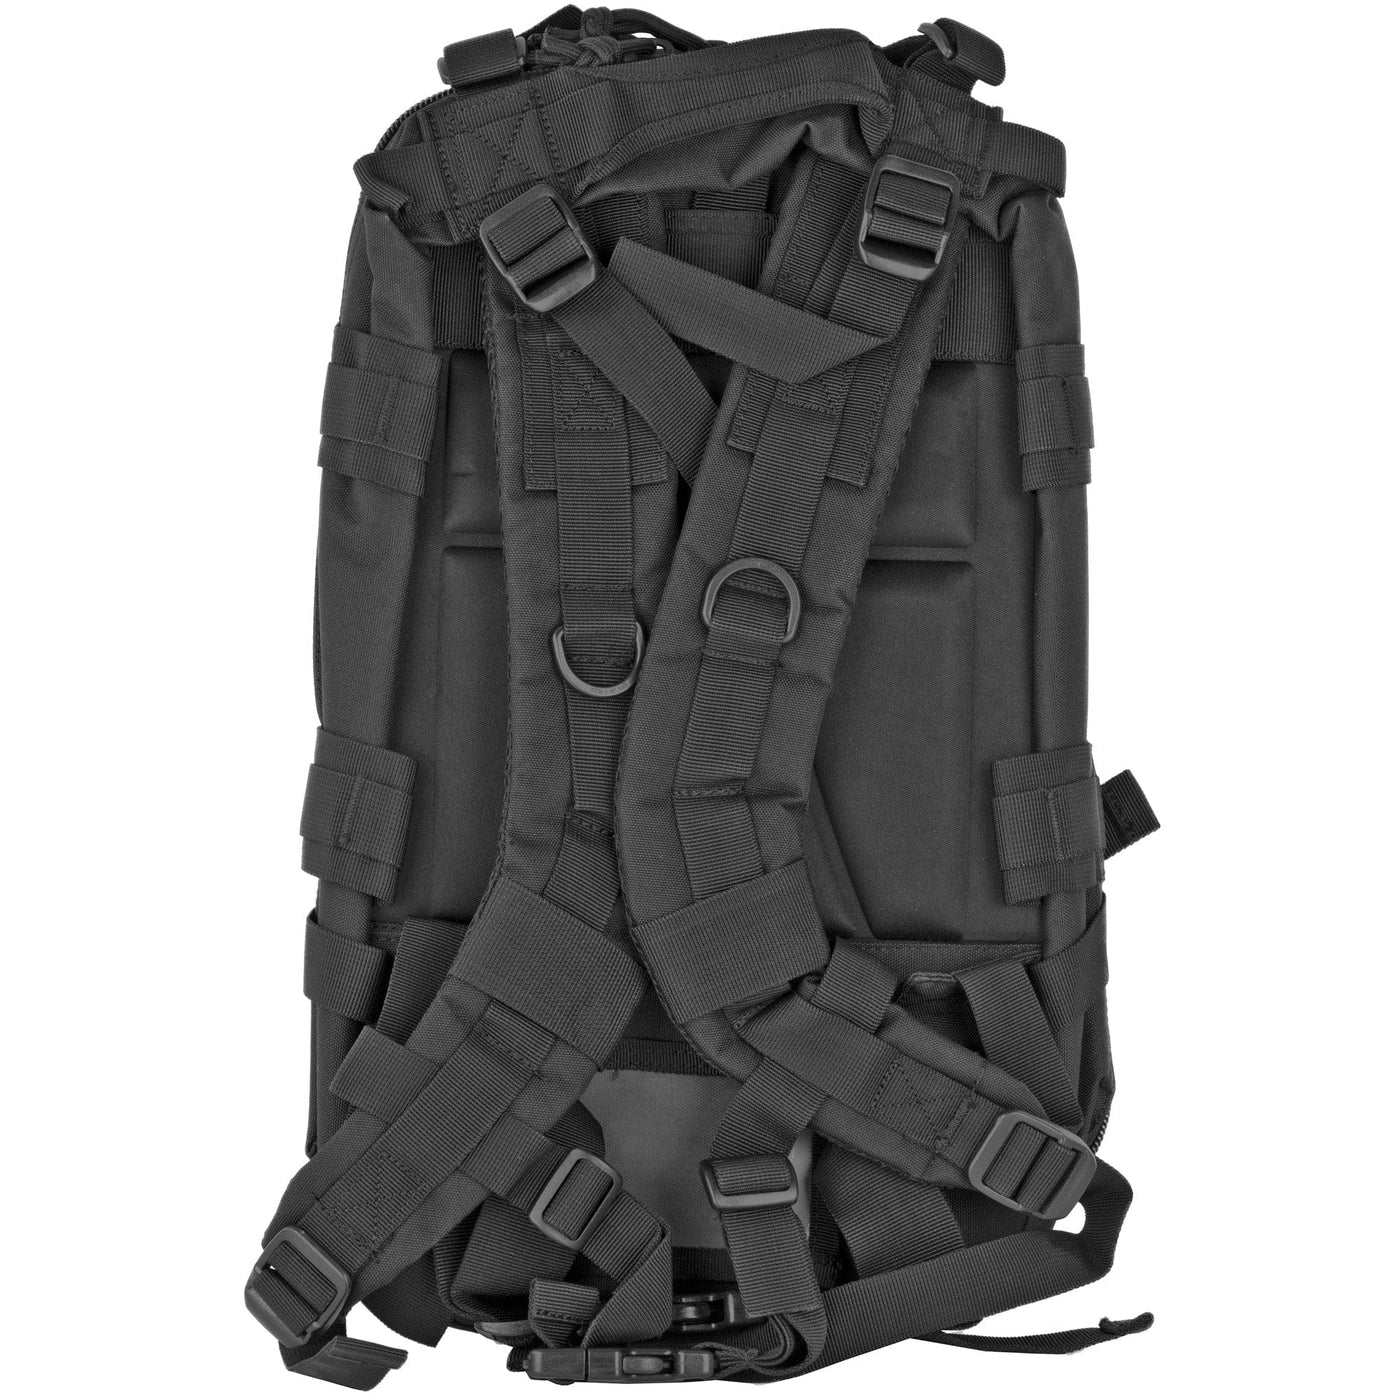 Full Forge Gear Full Forge Hurricane Tac Backpack Soft Gun Cases